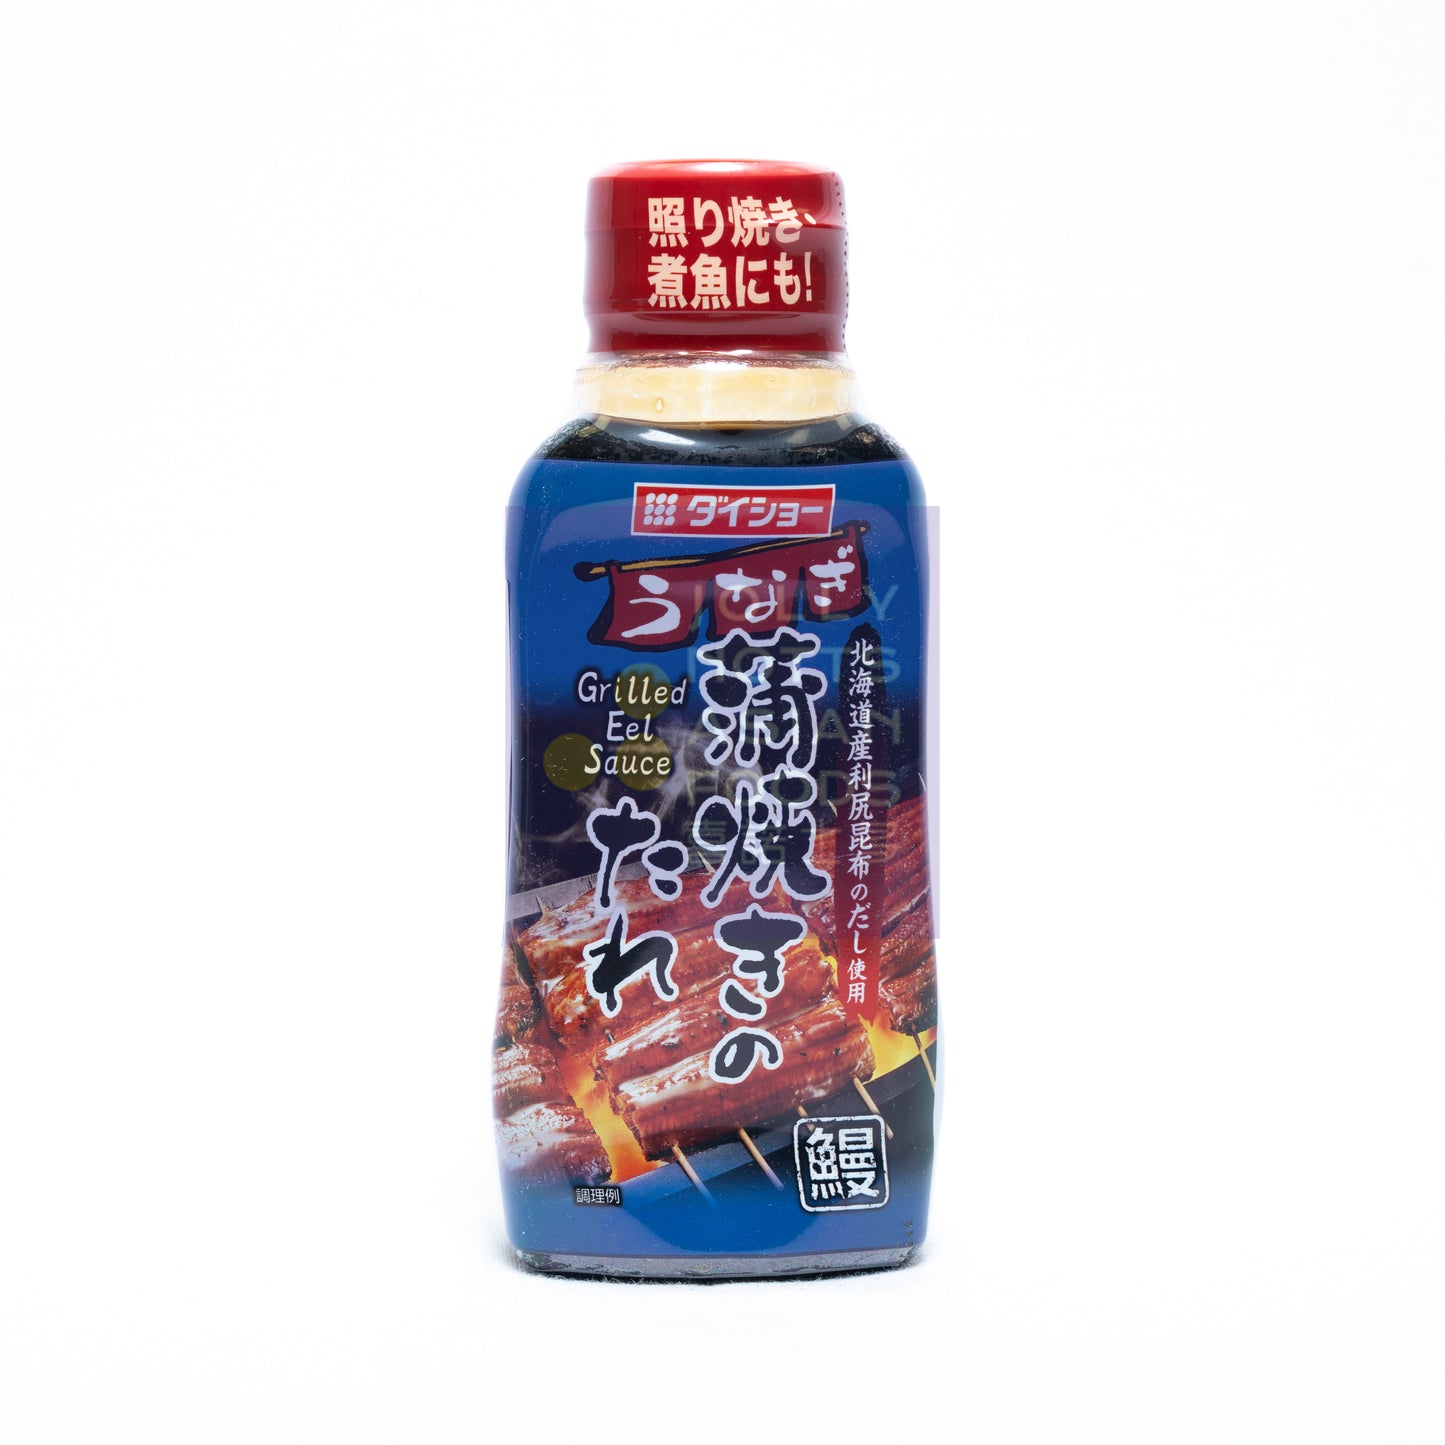 DAISHO Grilled Eel Sauce 蒲燒鰻魚汁 250g